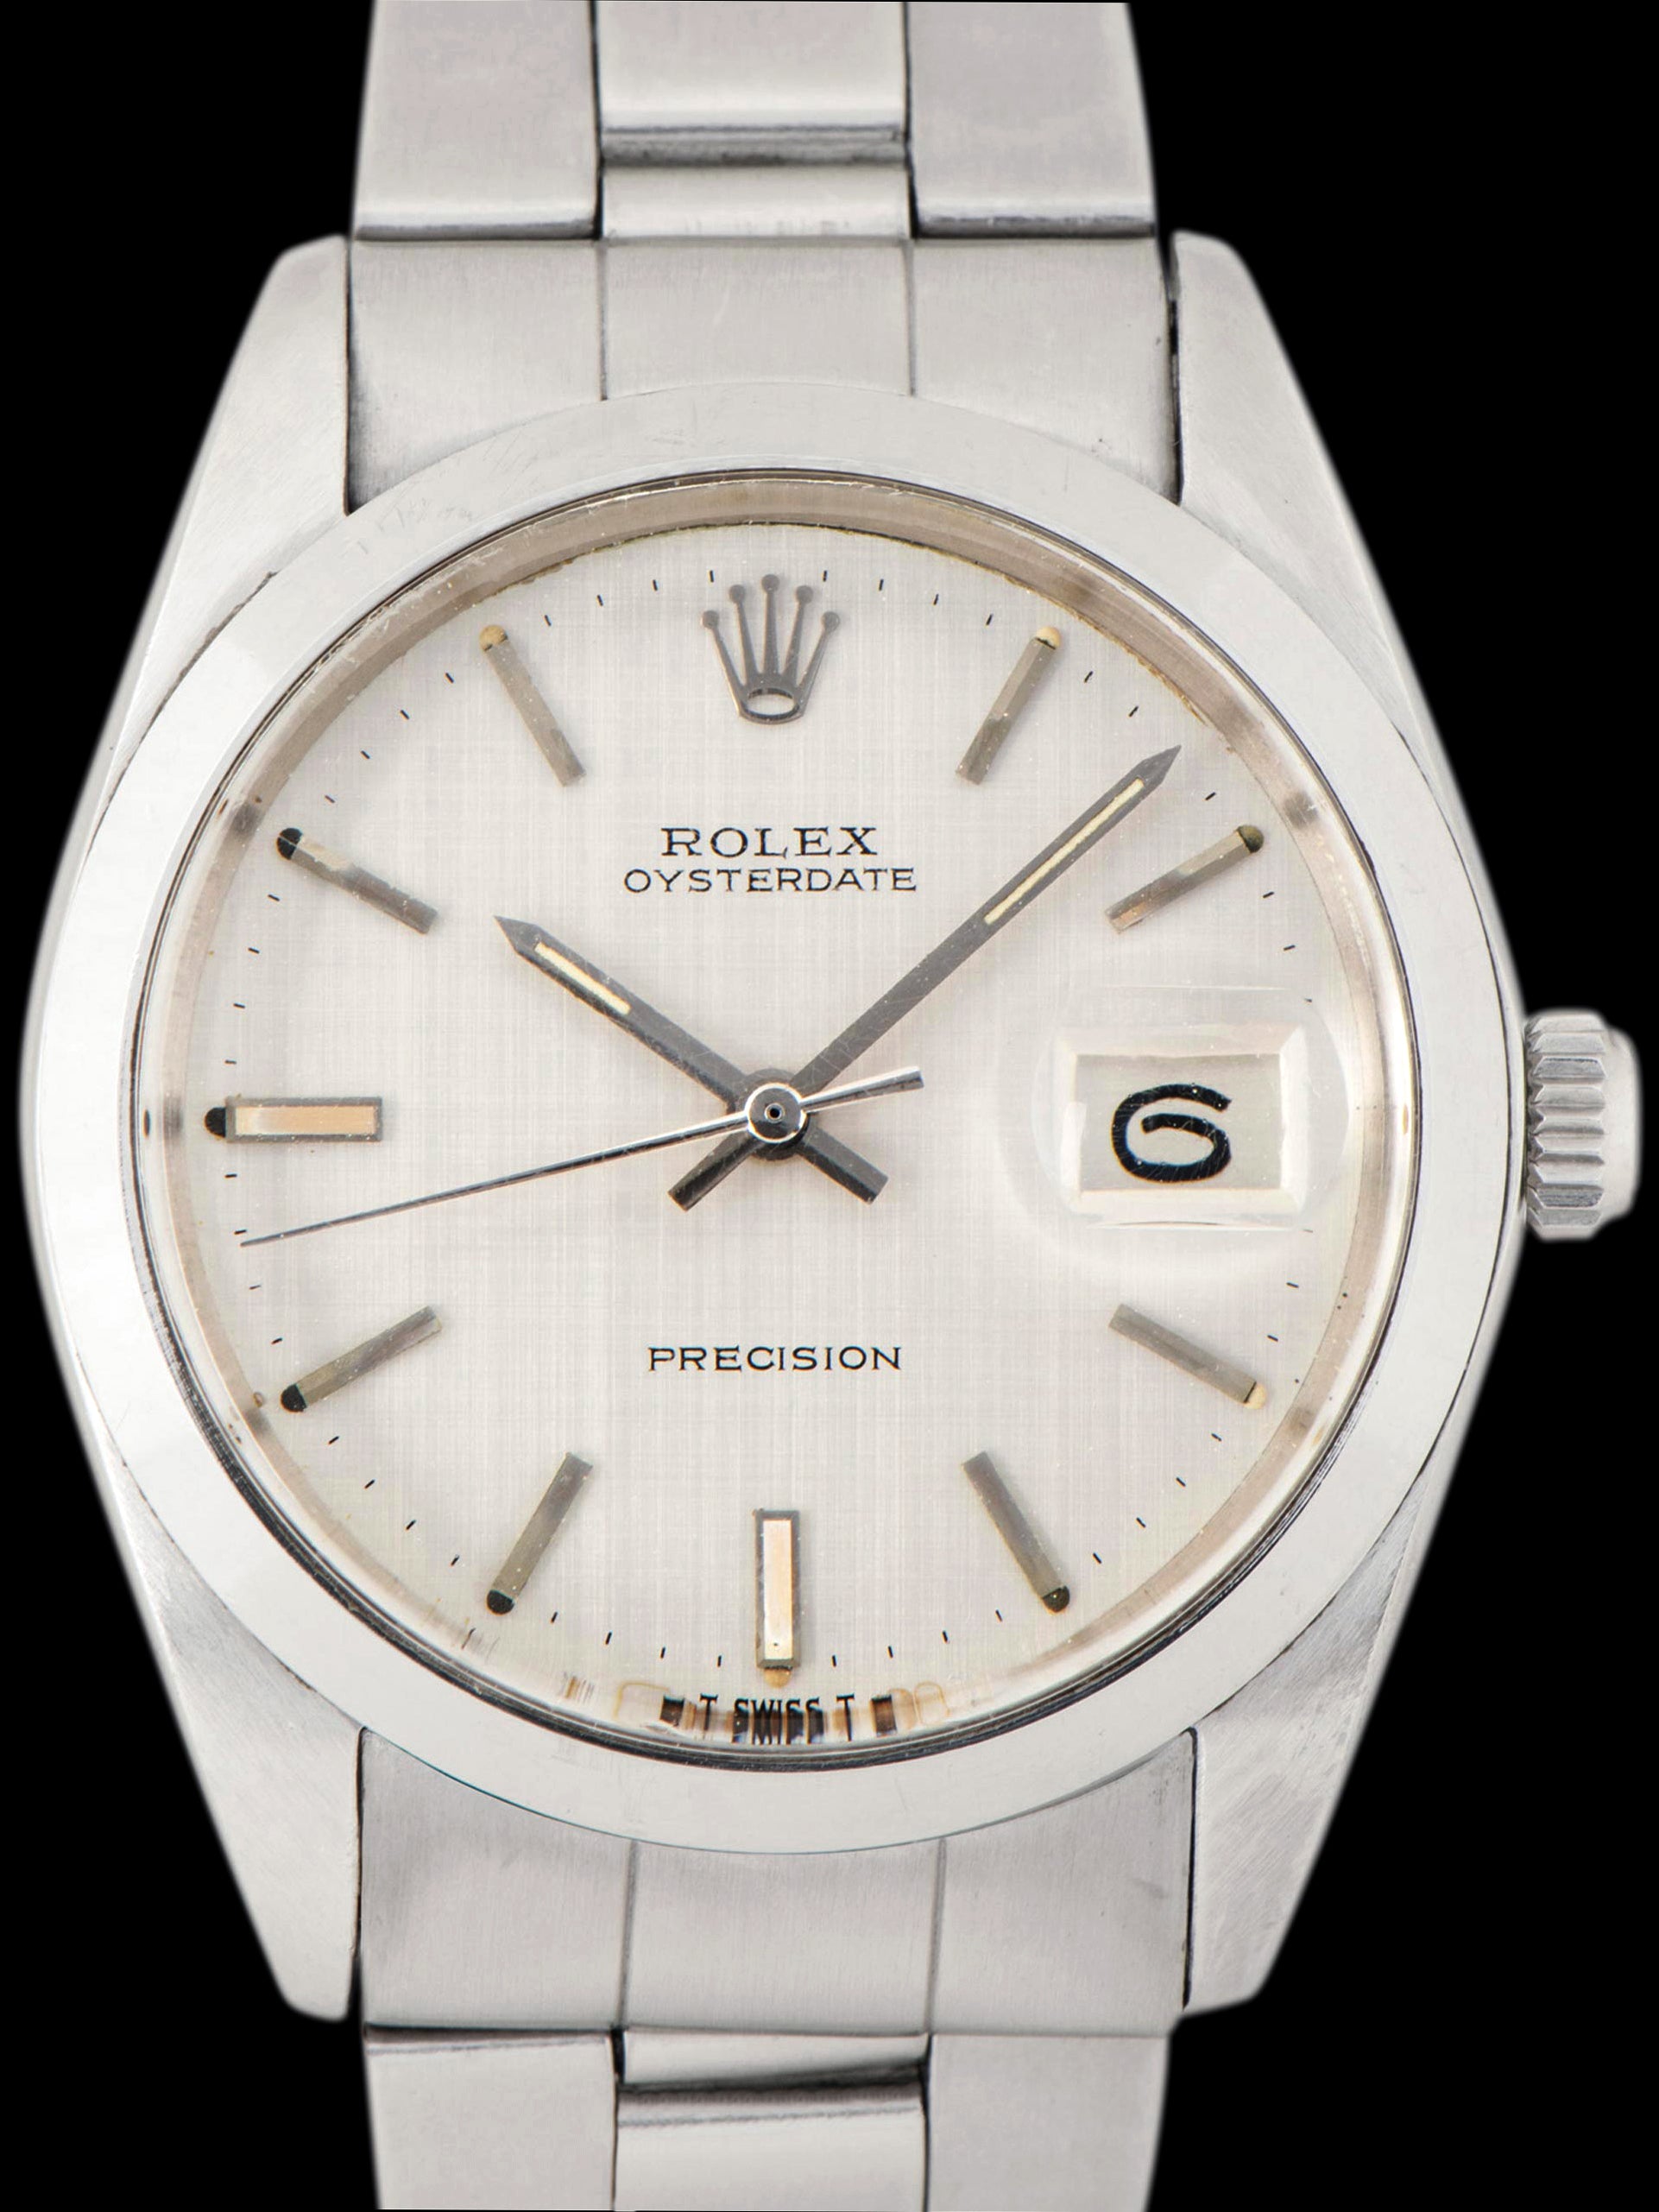 *Unpolished* 1973 Rolex Oysterdate Precision (Ref. 6694) Silver Linen Dial